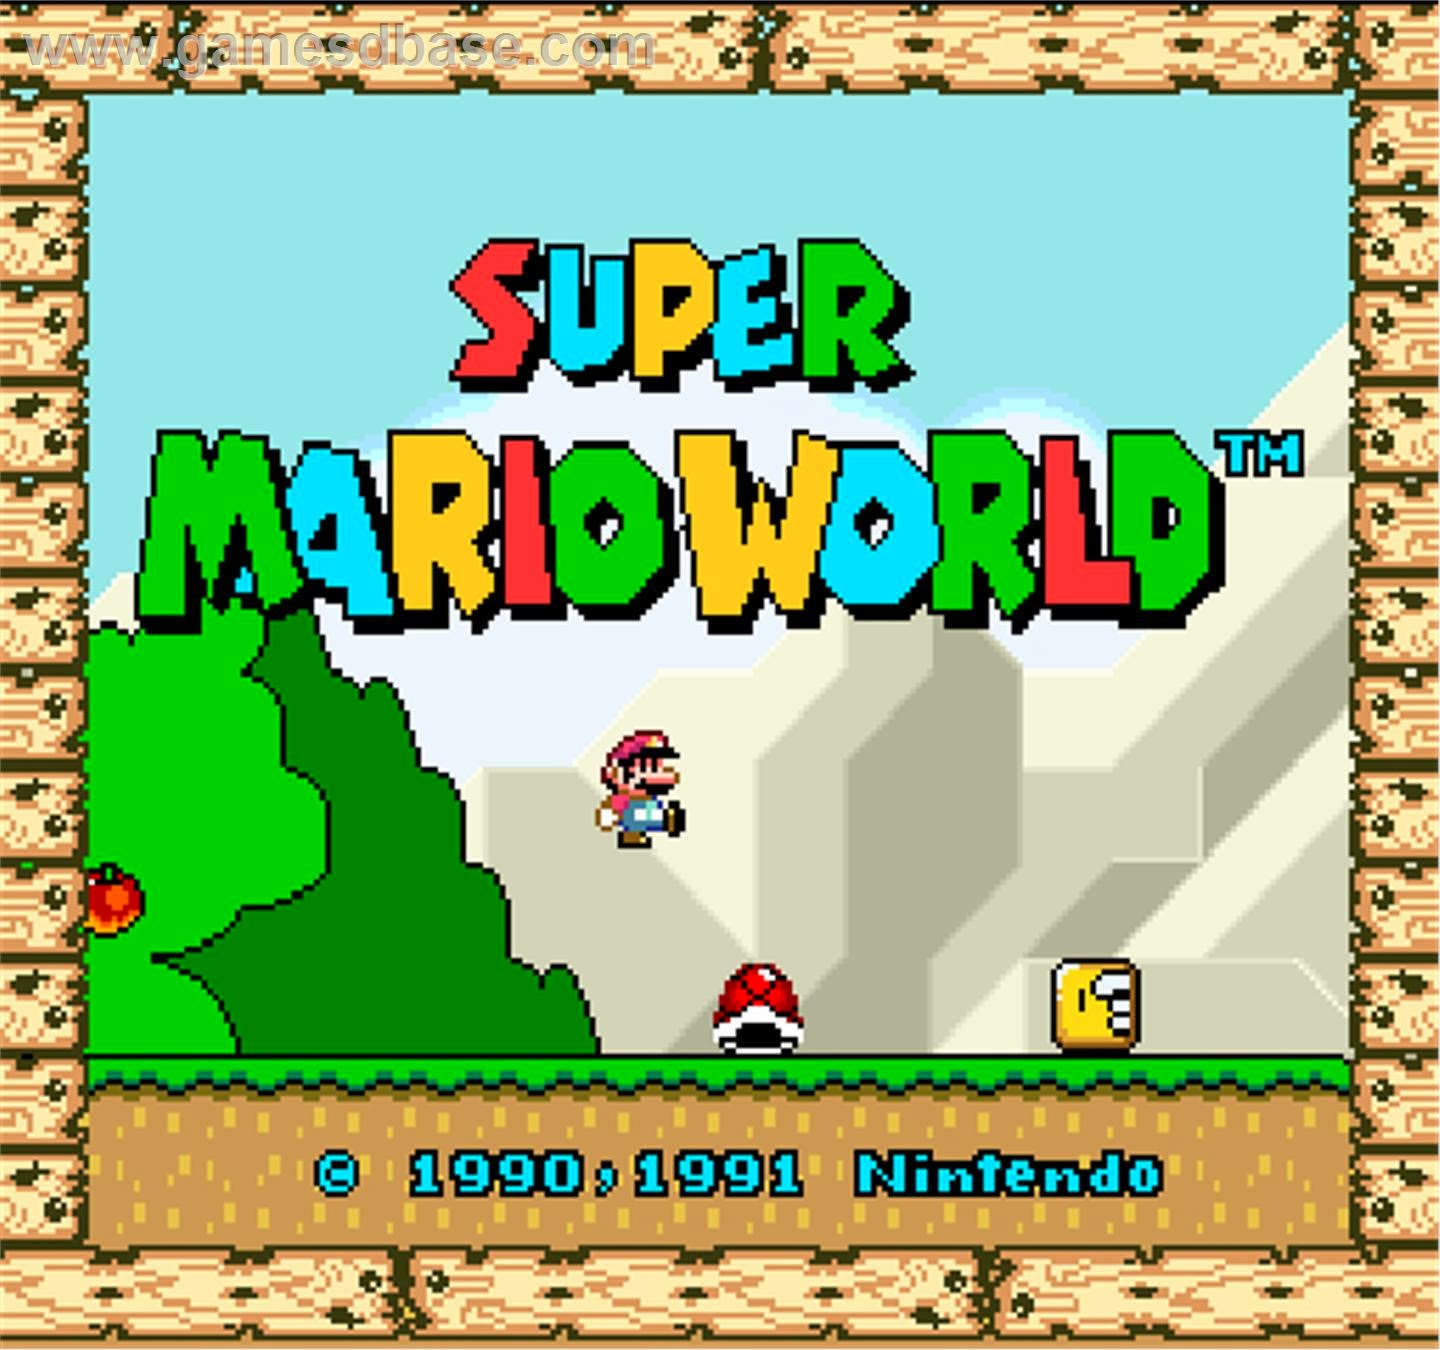 Super mario world. Супер Марио World. Super Nintendo Mario World. Супер Марио ворд ниндендо. Super Mario World 1989.